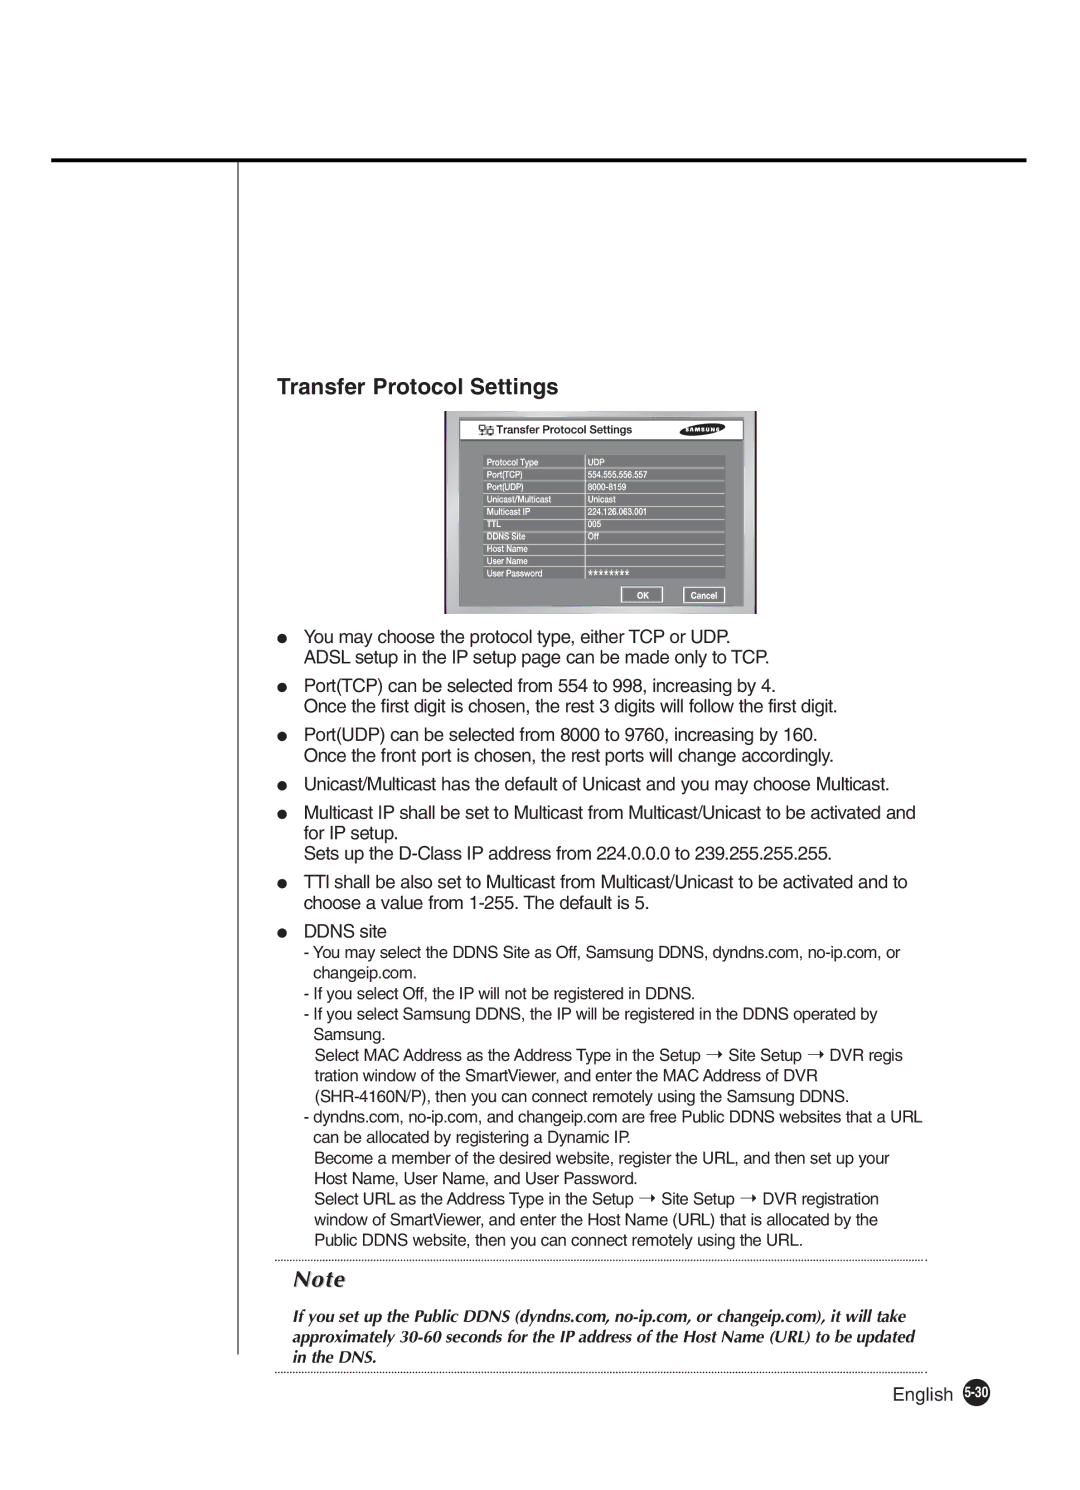 Samsung SHR-4160P manual Transfer Protocol Settings 